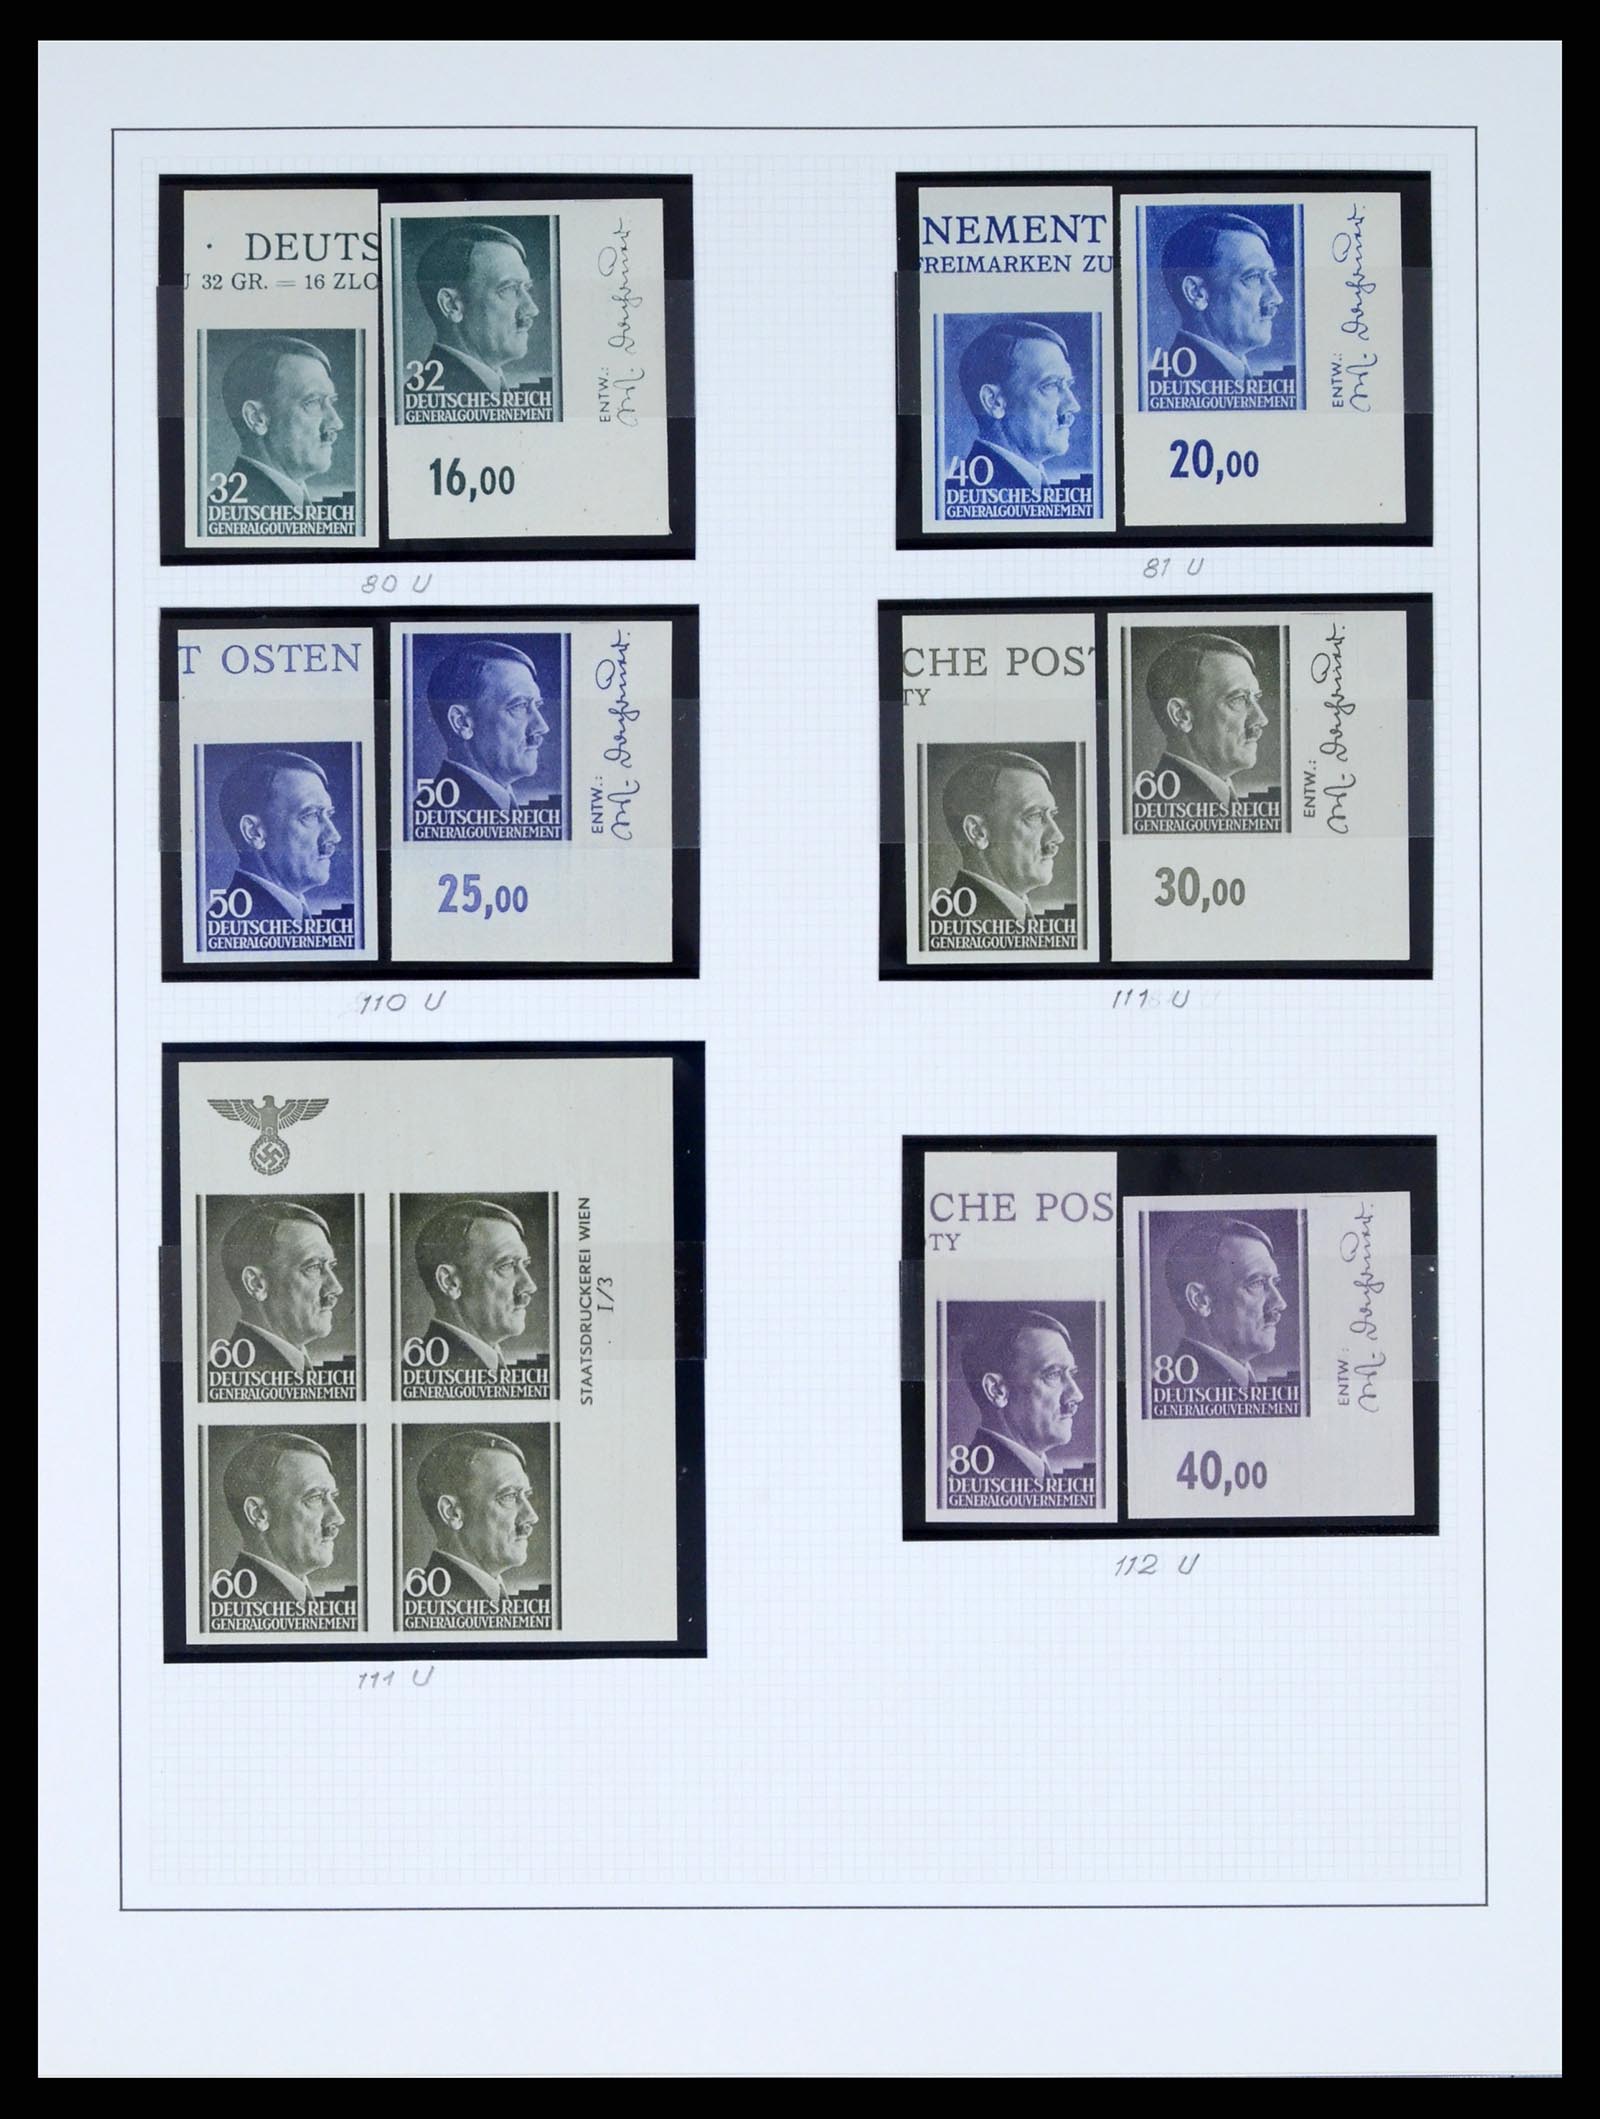 37535 051 - Stamp collection 37535 German occupation second worldwar 1939-1945.